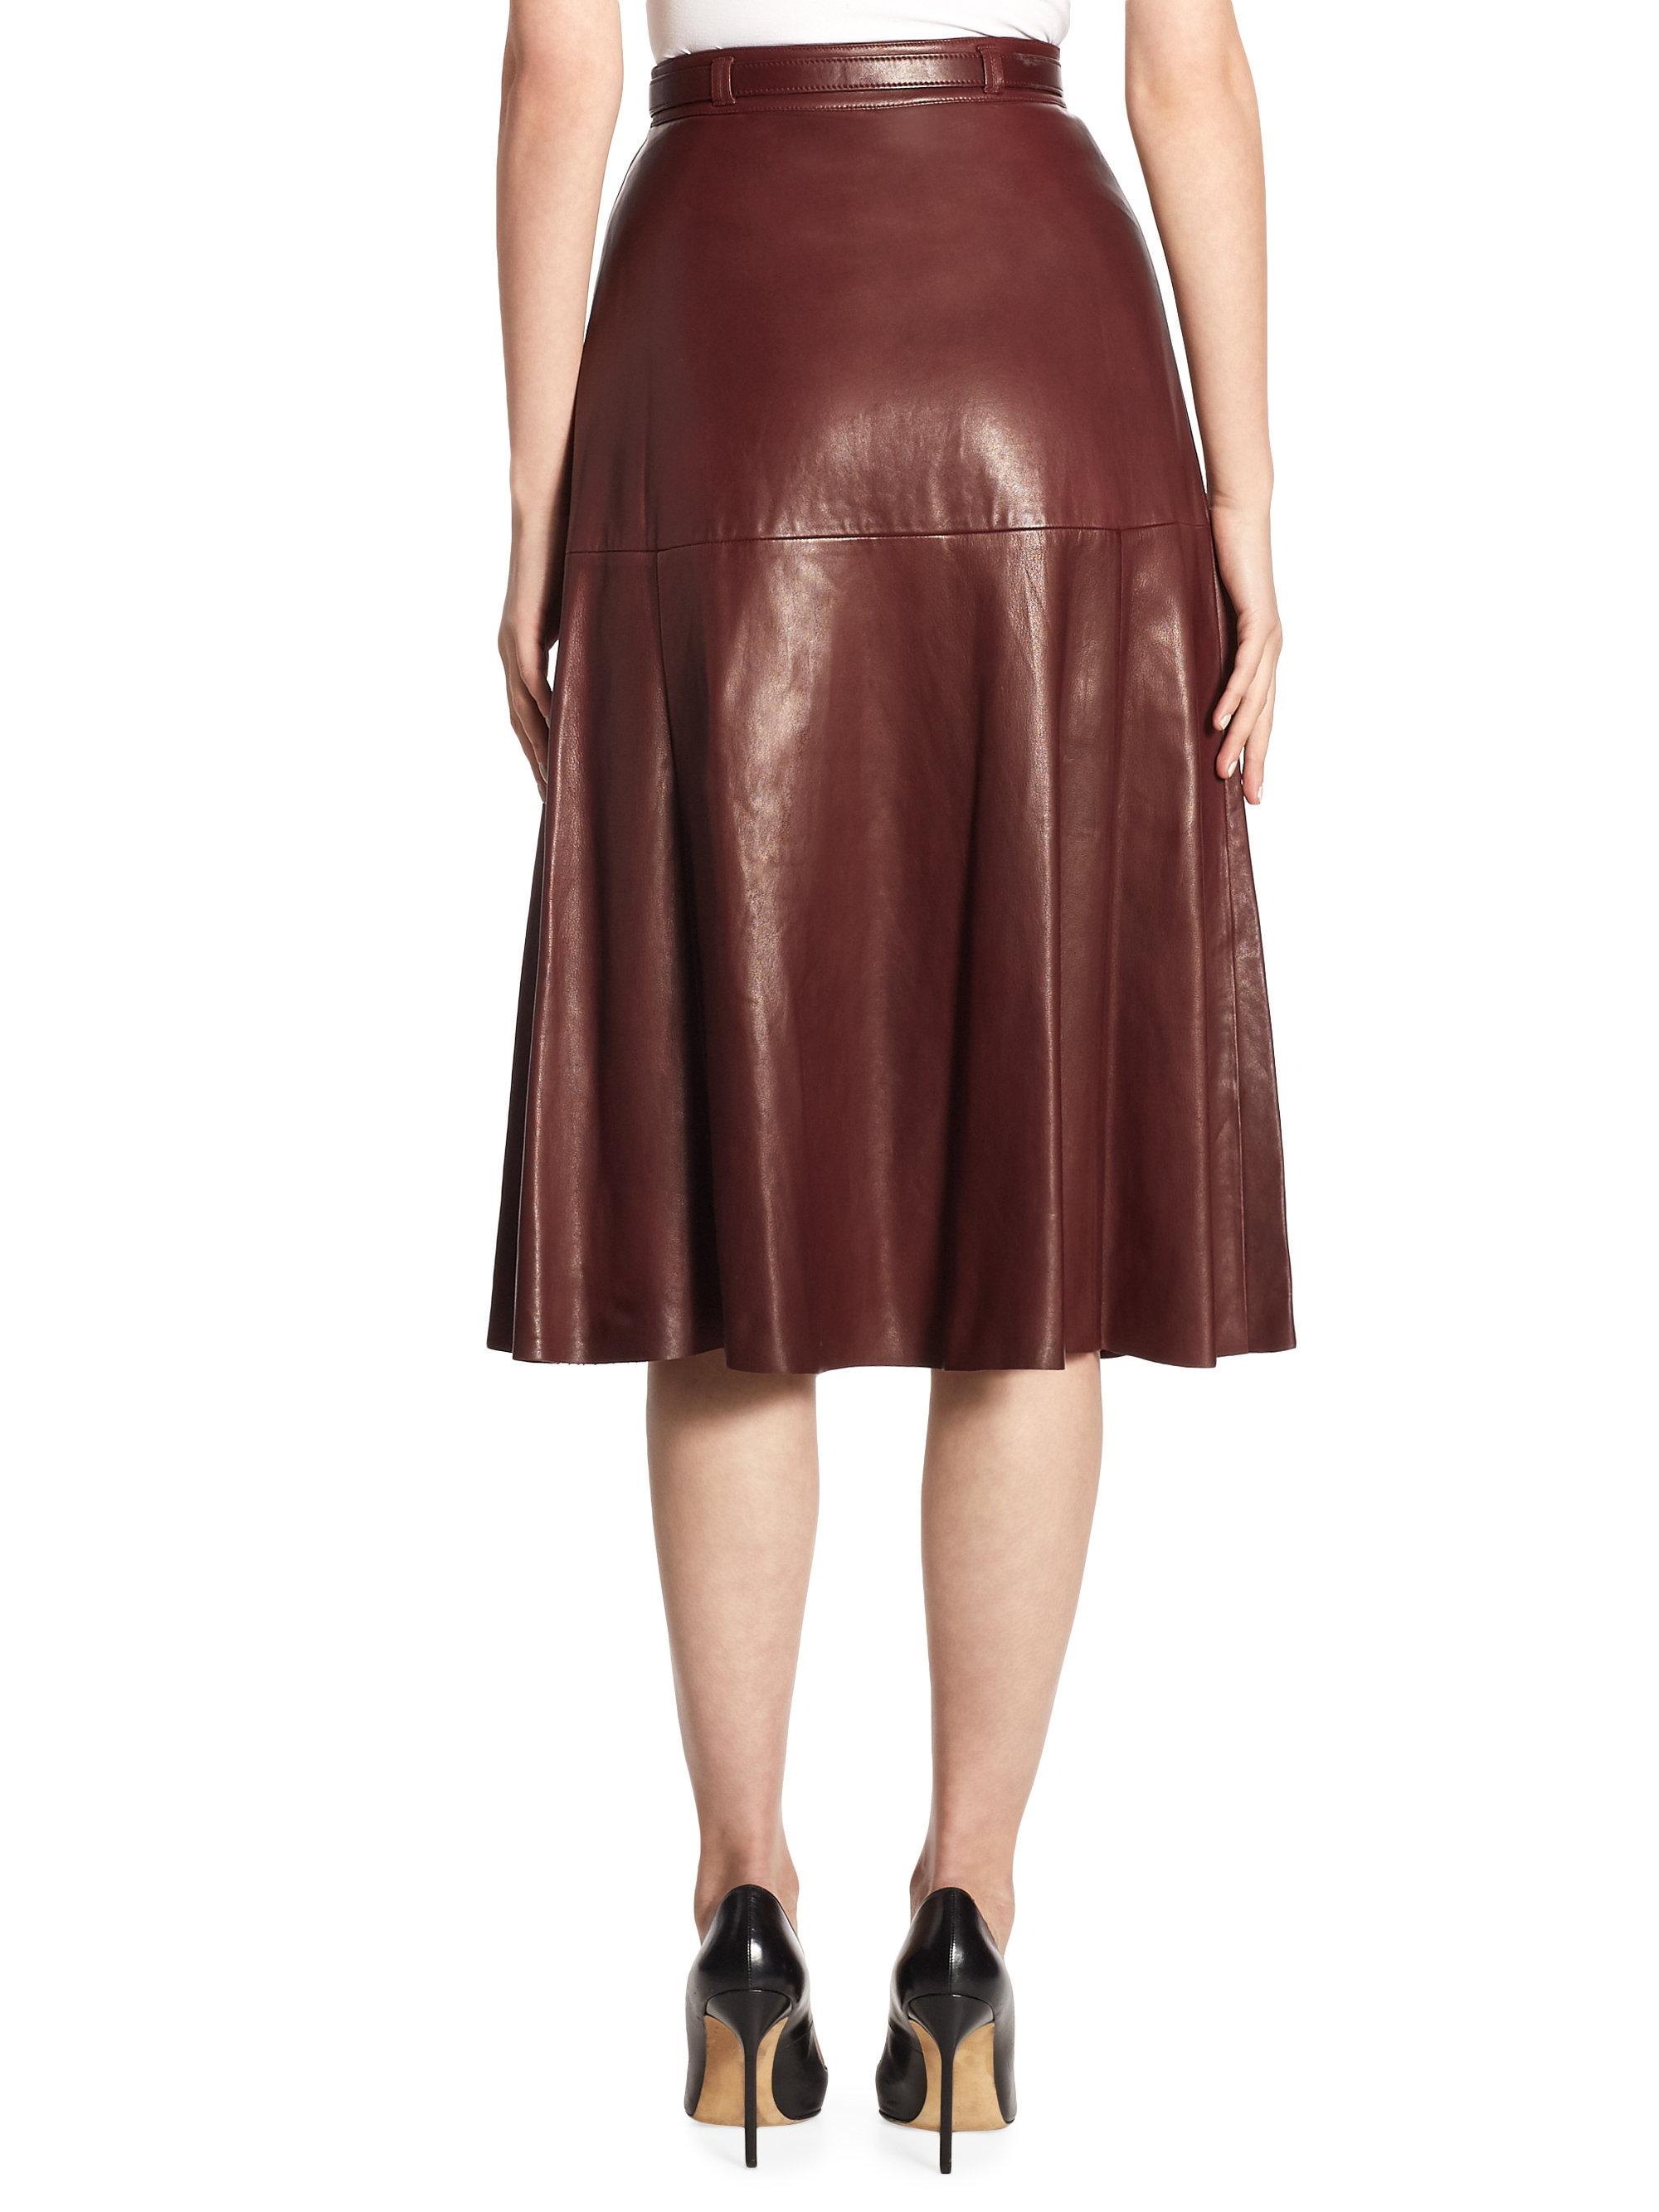 Ralph Lauren Collection Carlotta Leather Skirt - Lyst